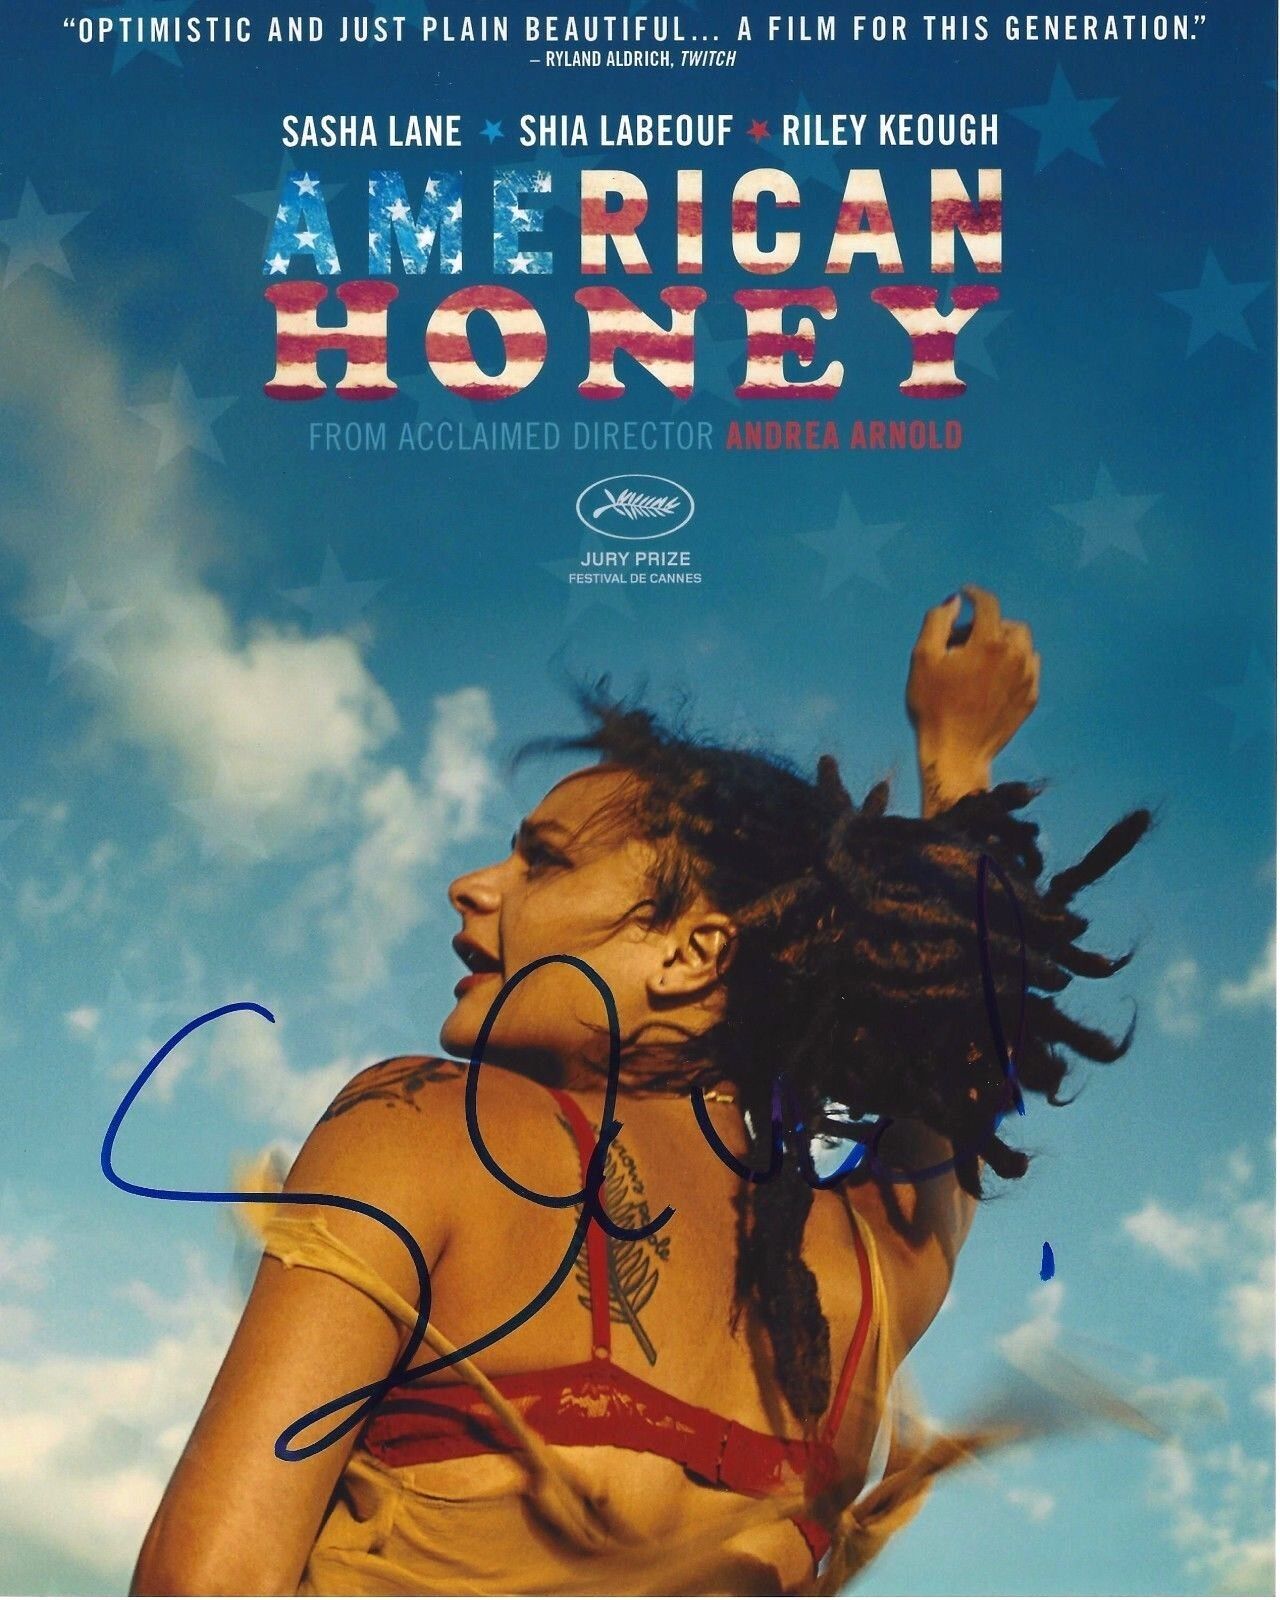 ACTRESS SASHA LANE SIGNED AMERICAN HONEY MOVIE 8X10 Photo Poster painting W/COA SHIA LEBEOUF